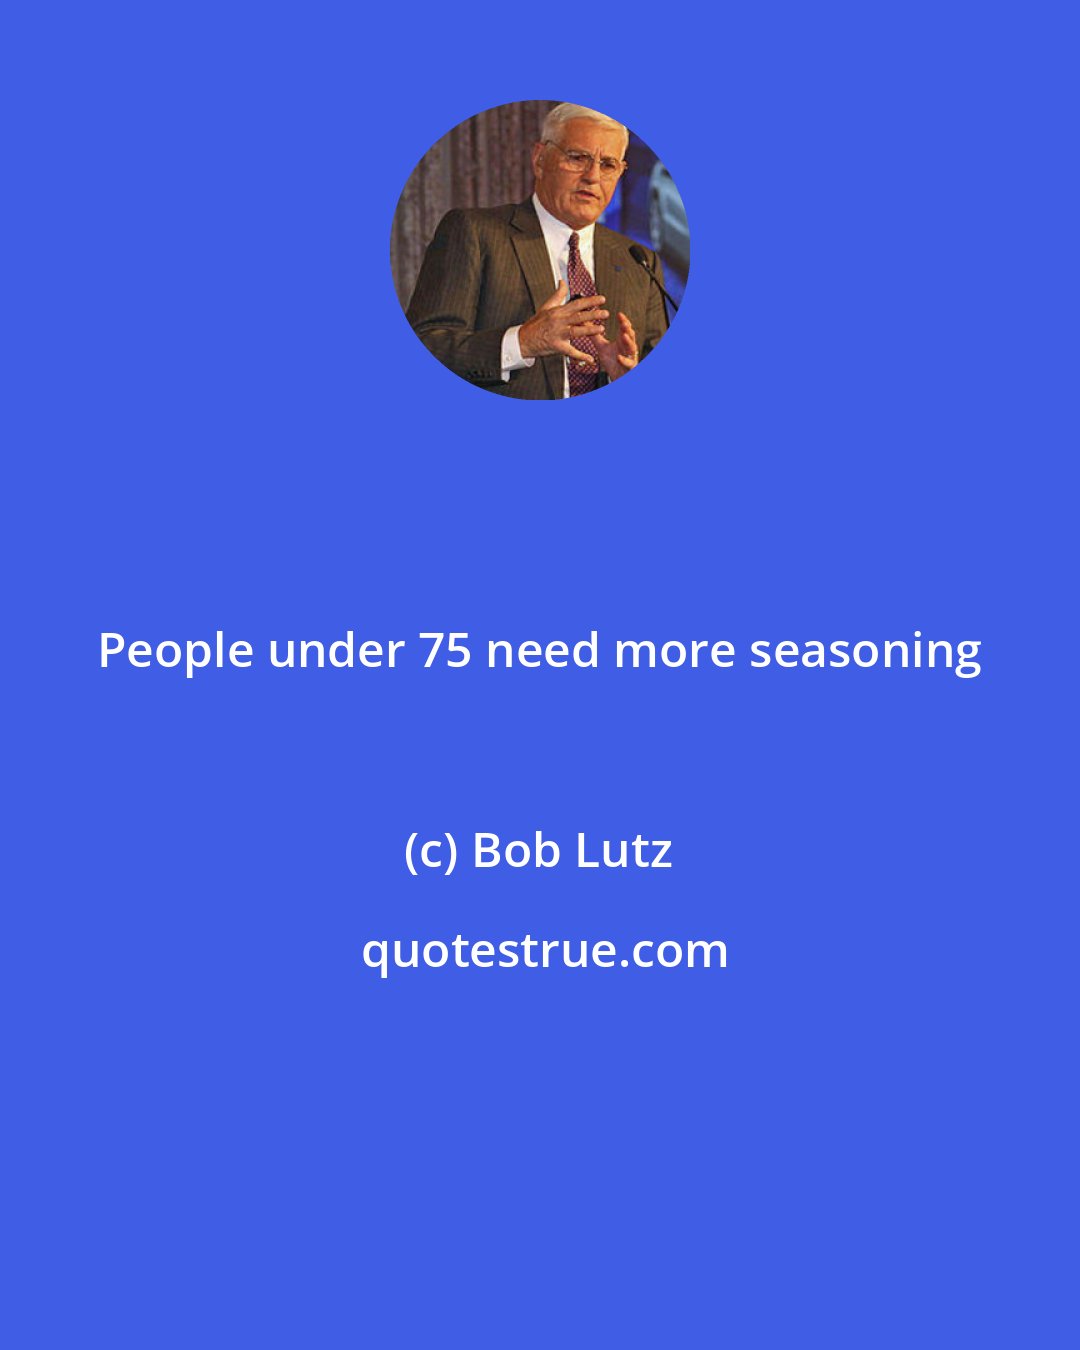 Bob Lutz: People under 75 need more seasoning